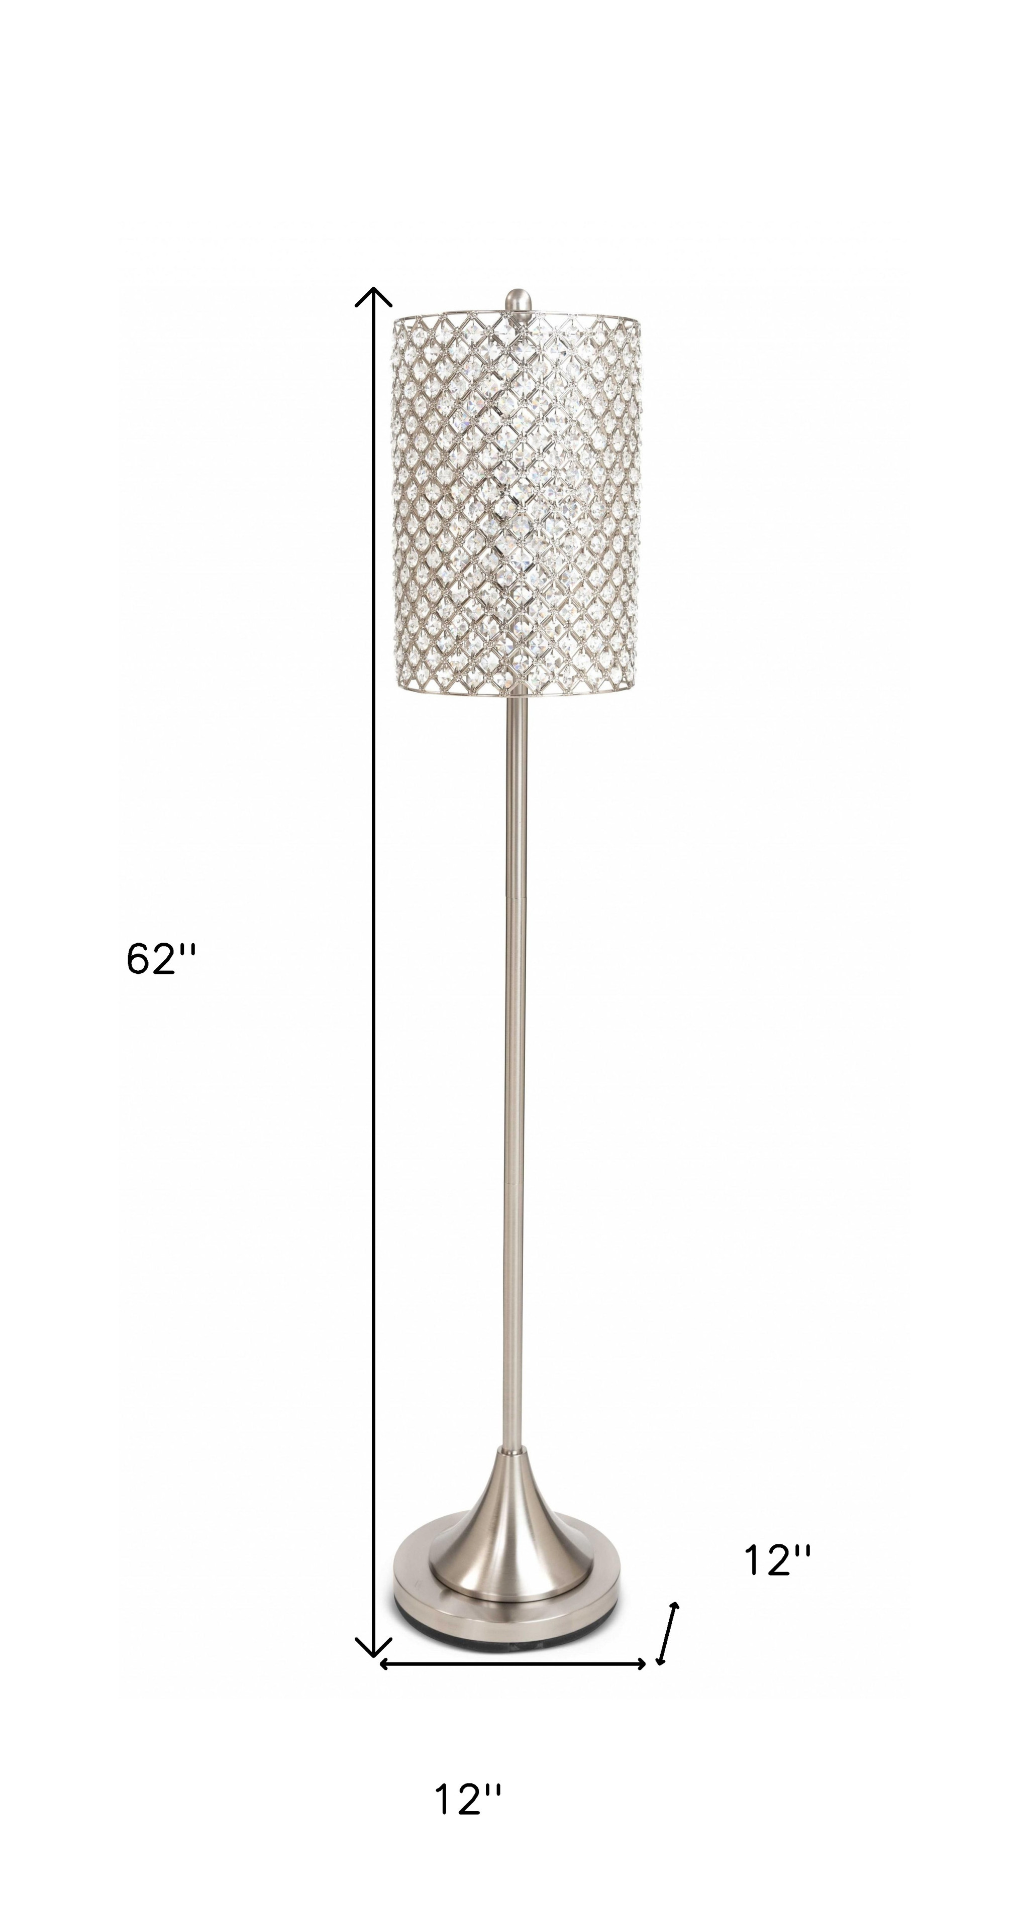 Boho Aesthetic "62"" Drum Shade Crystal Bead Metal Floor Lamp" | Biophilic Design Airbnb Decor Furniture 